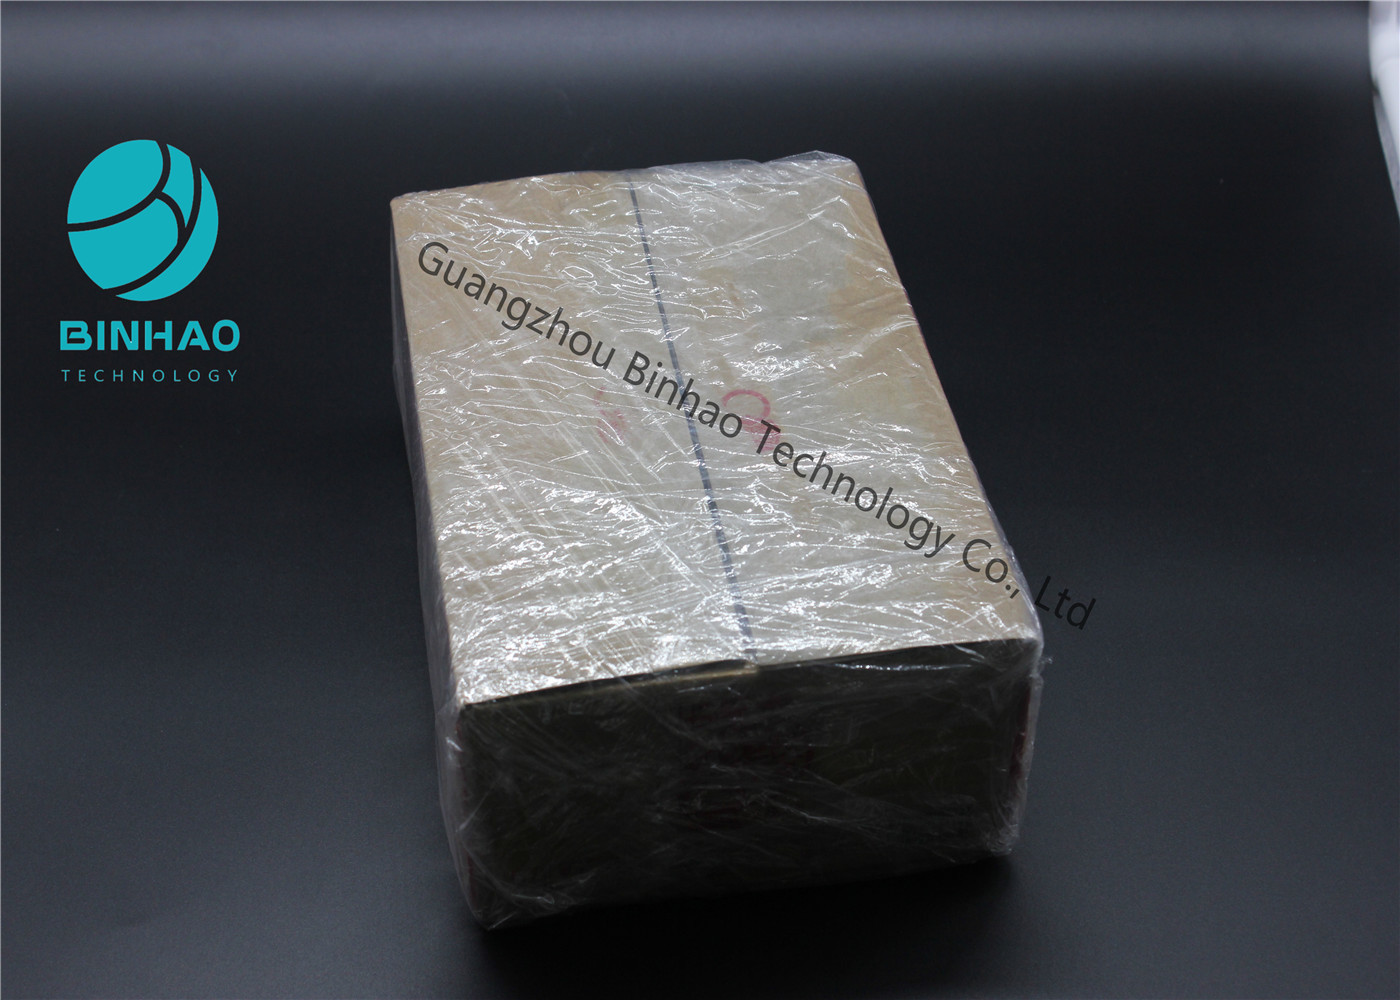 Stretch Wrap Sealable BOPP Packaging Film Soft Hardness High Density Design